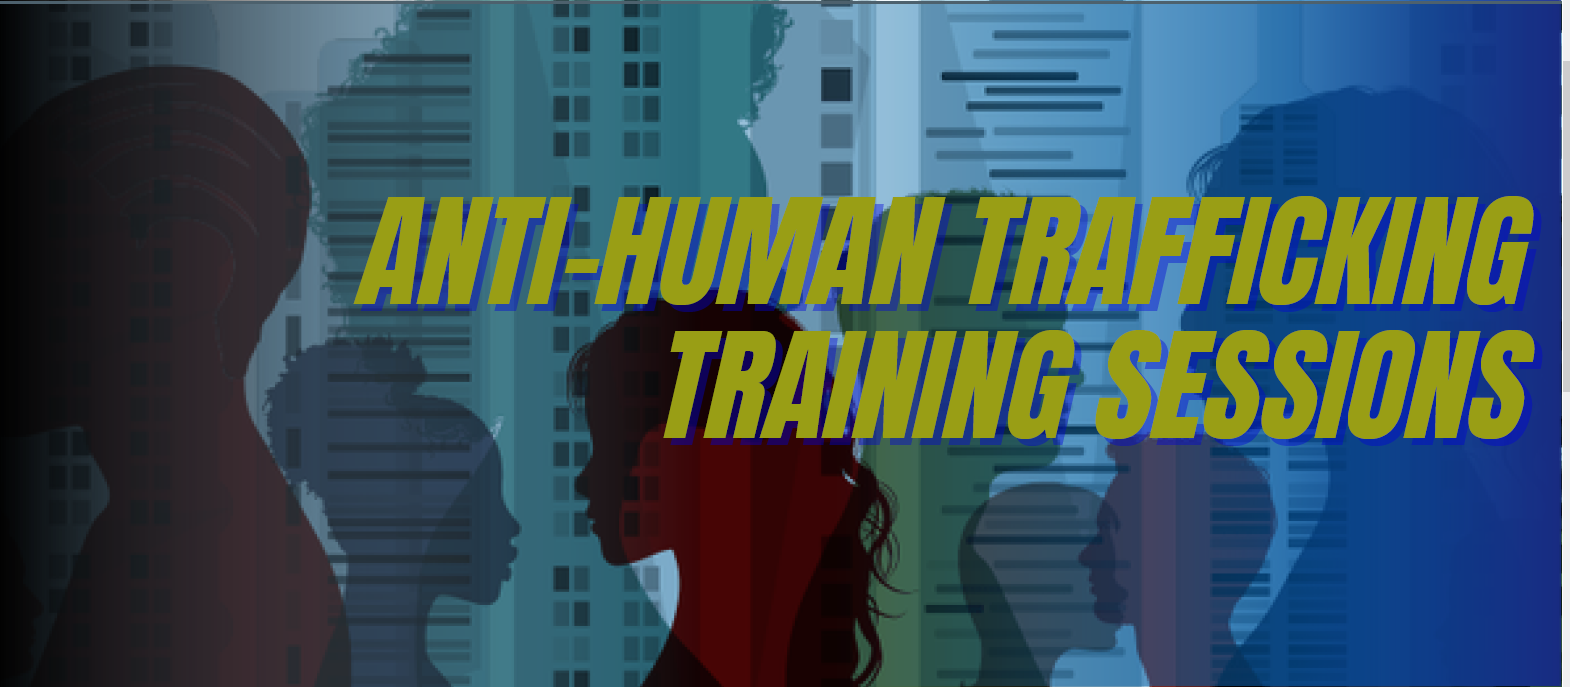 Martha’s Vineyard Hospital, Global Strategic Operatives present educational training focusing on human trafficking 